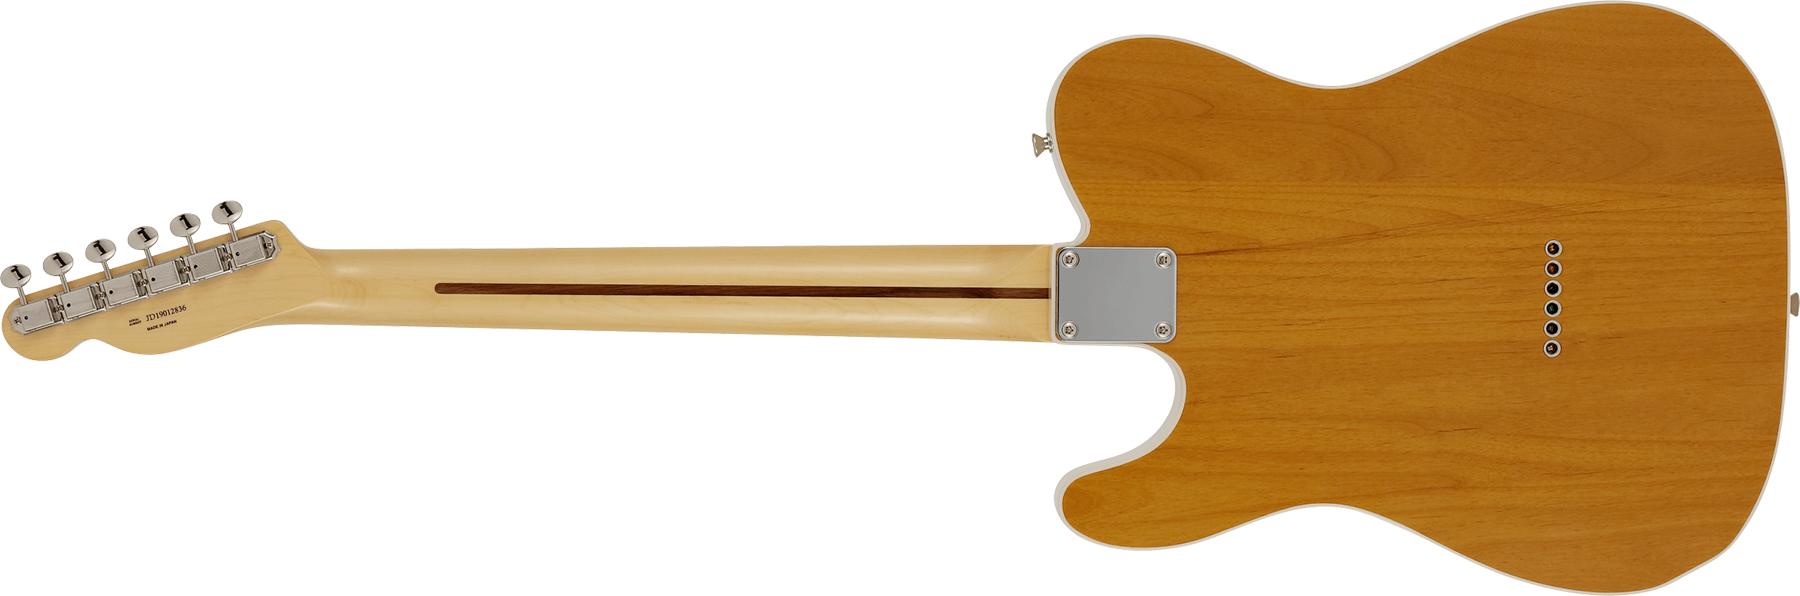 Fender Tele Mhak  Art Gallery Jap Hs Mn - Natural - Tel shape electric guitar - Variation 1